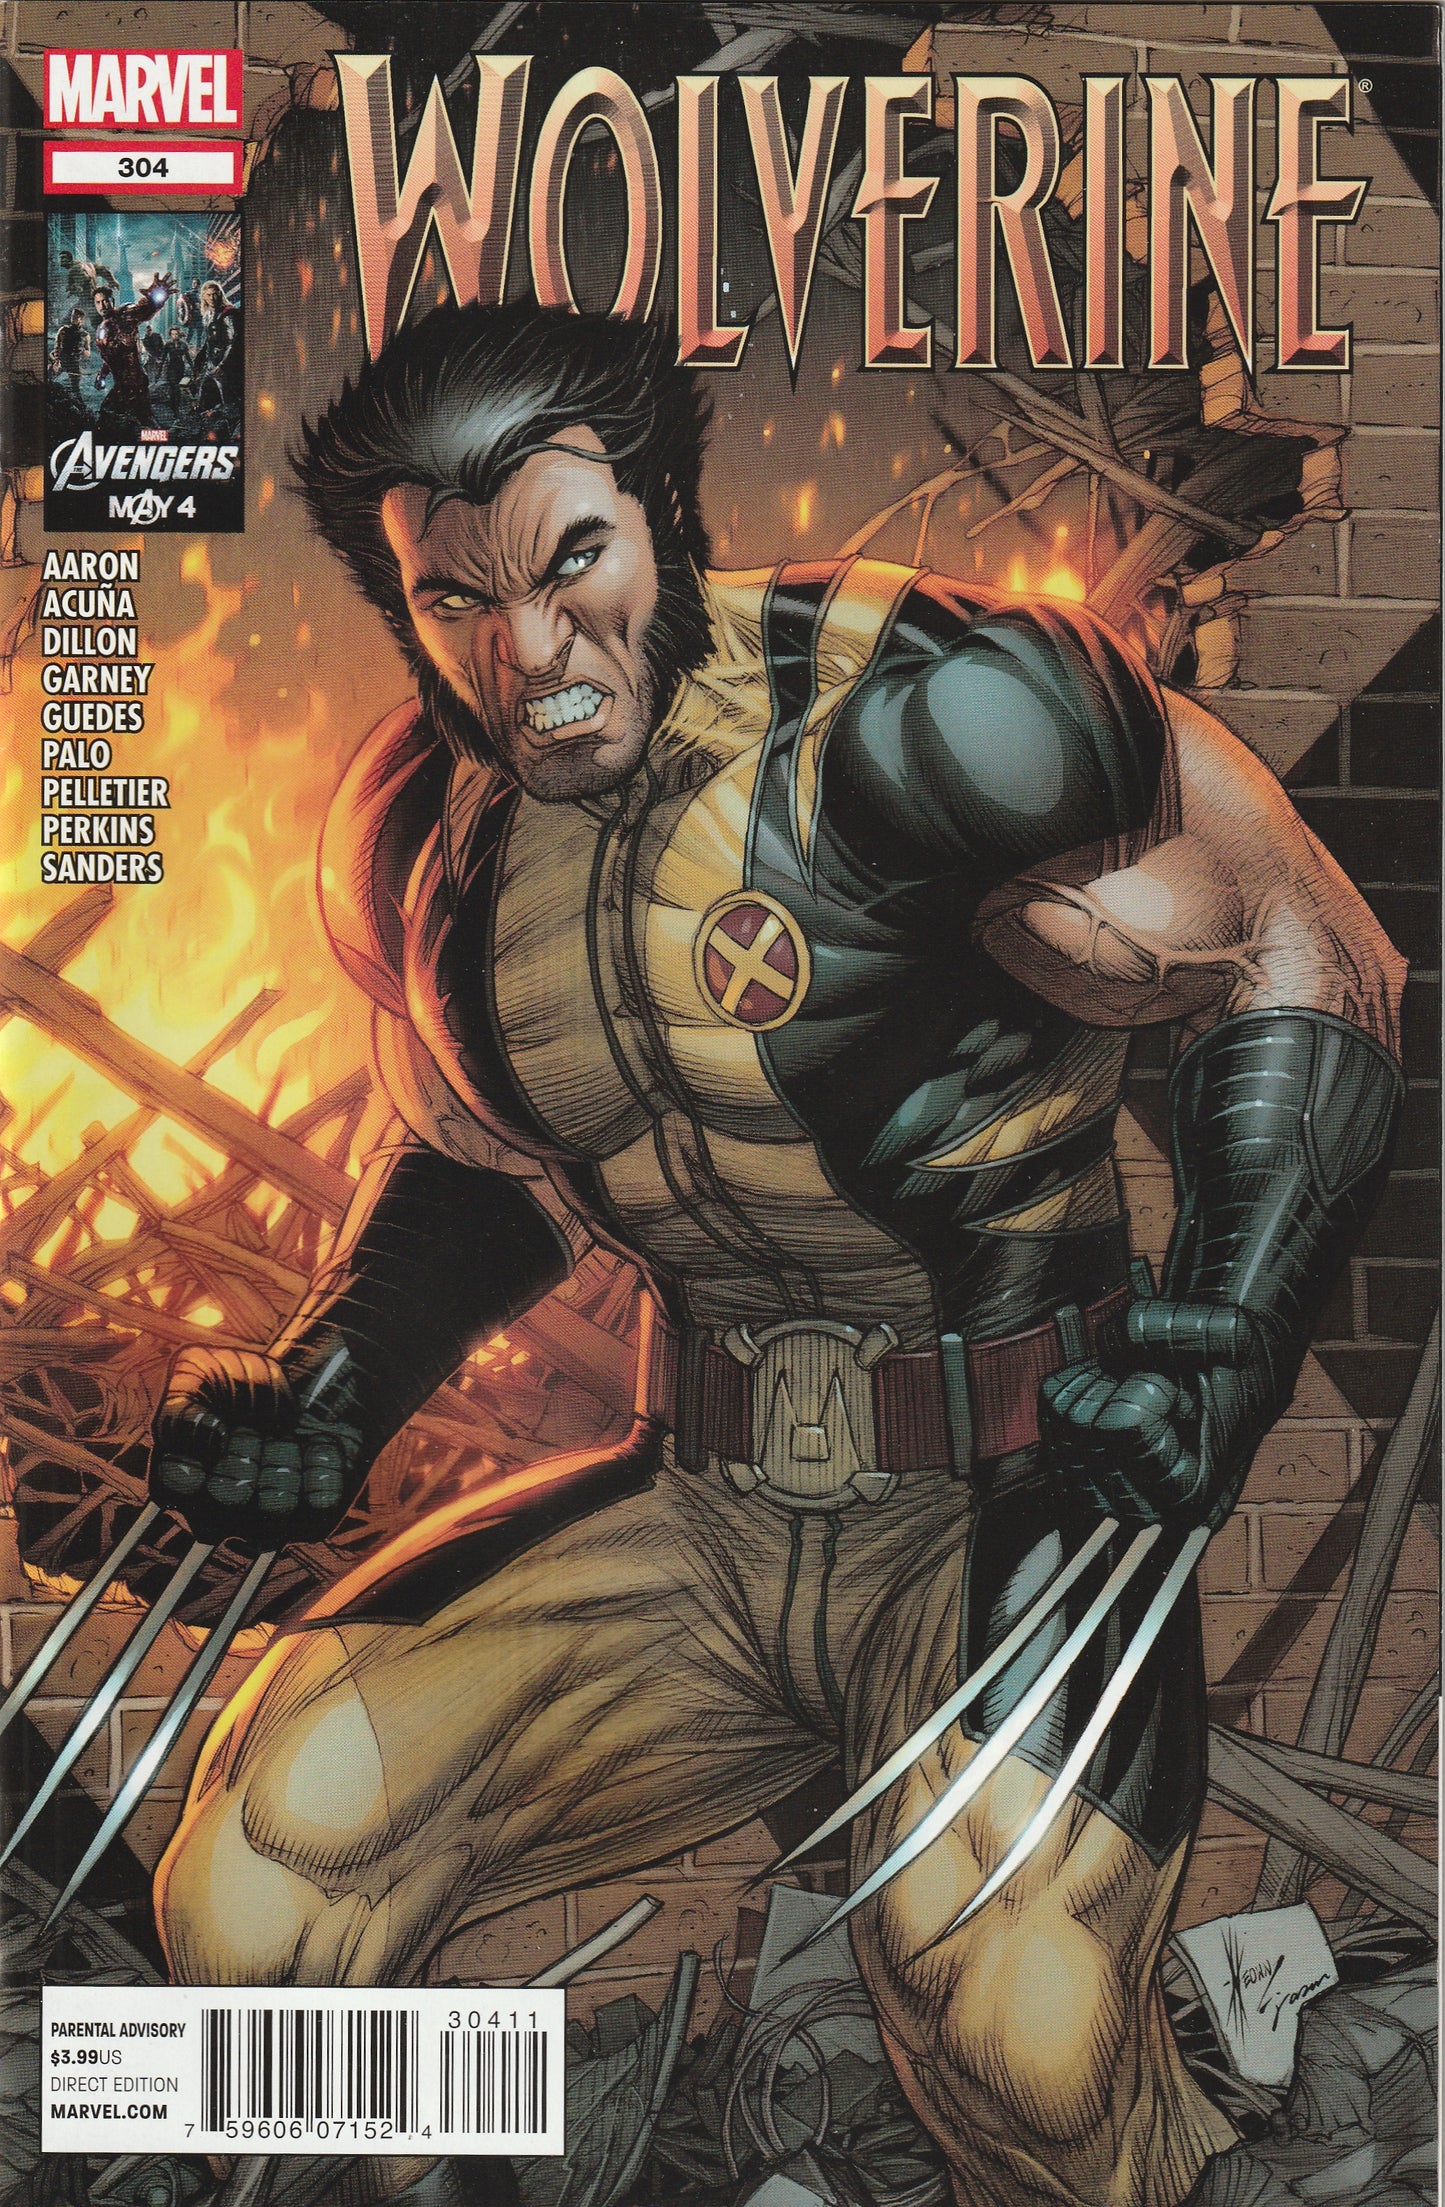 Wolverine #304 (2012) - Final Issue In Jason Aaron's Run